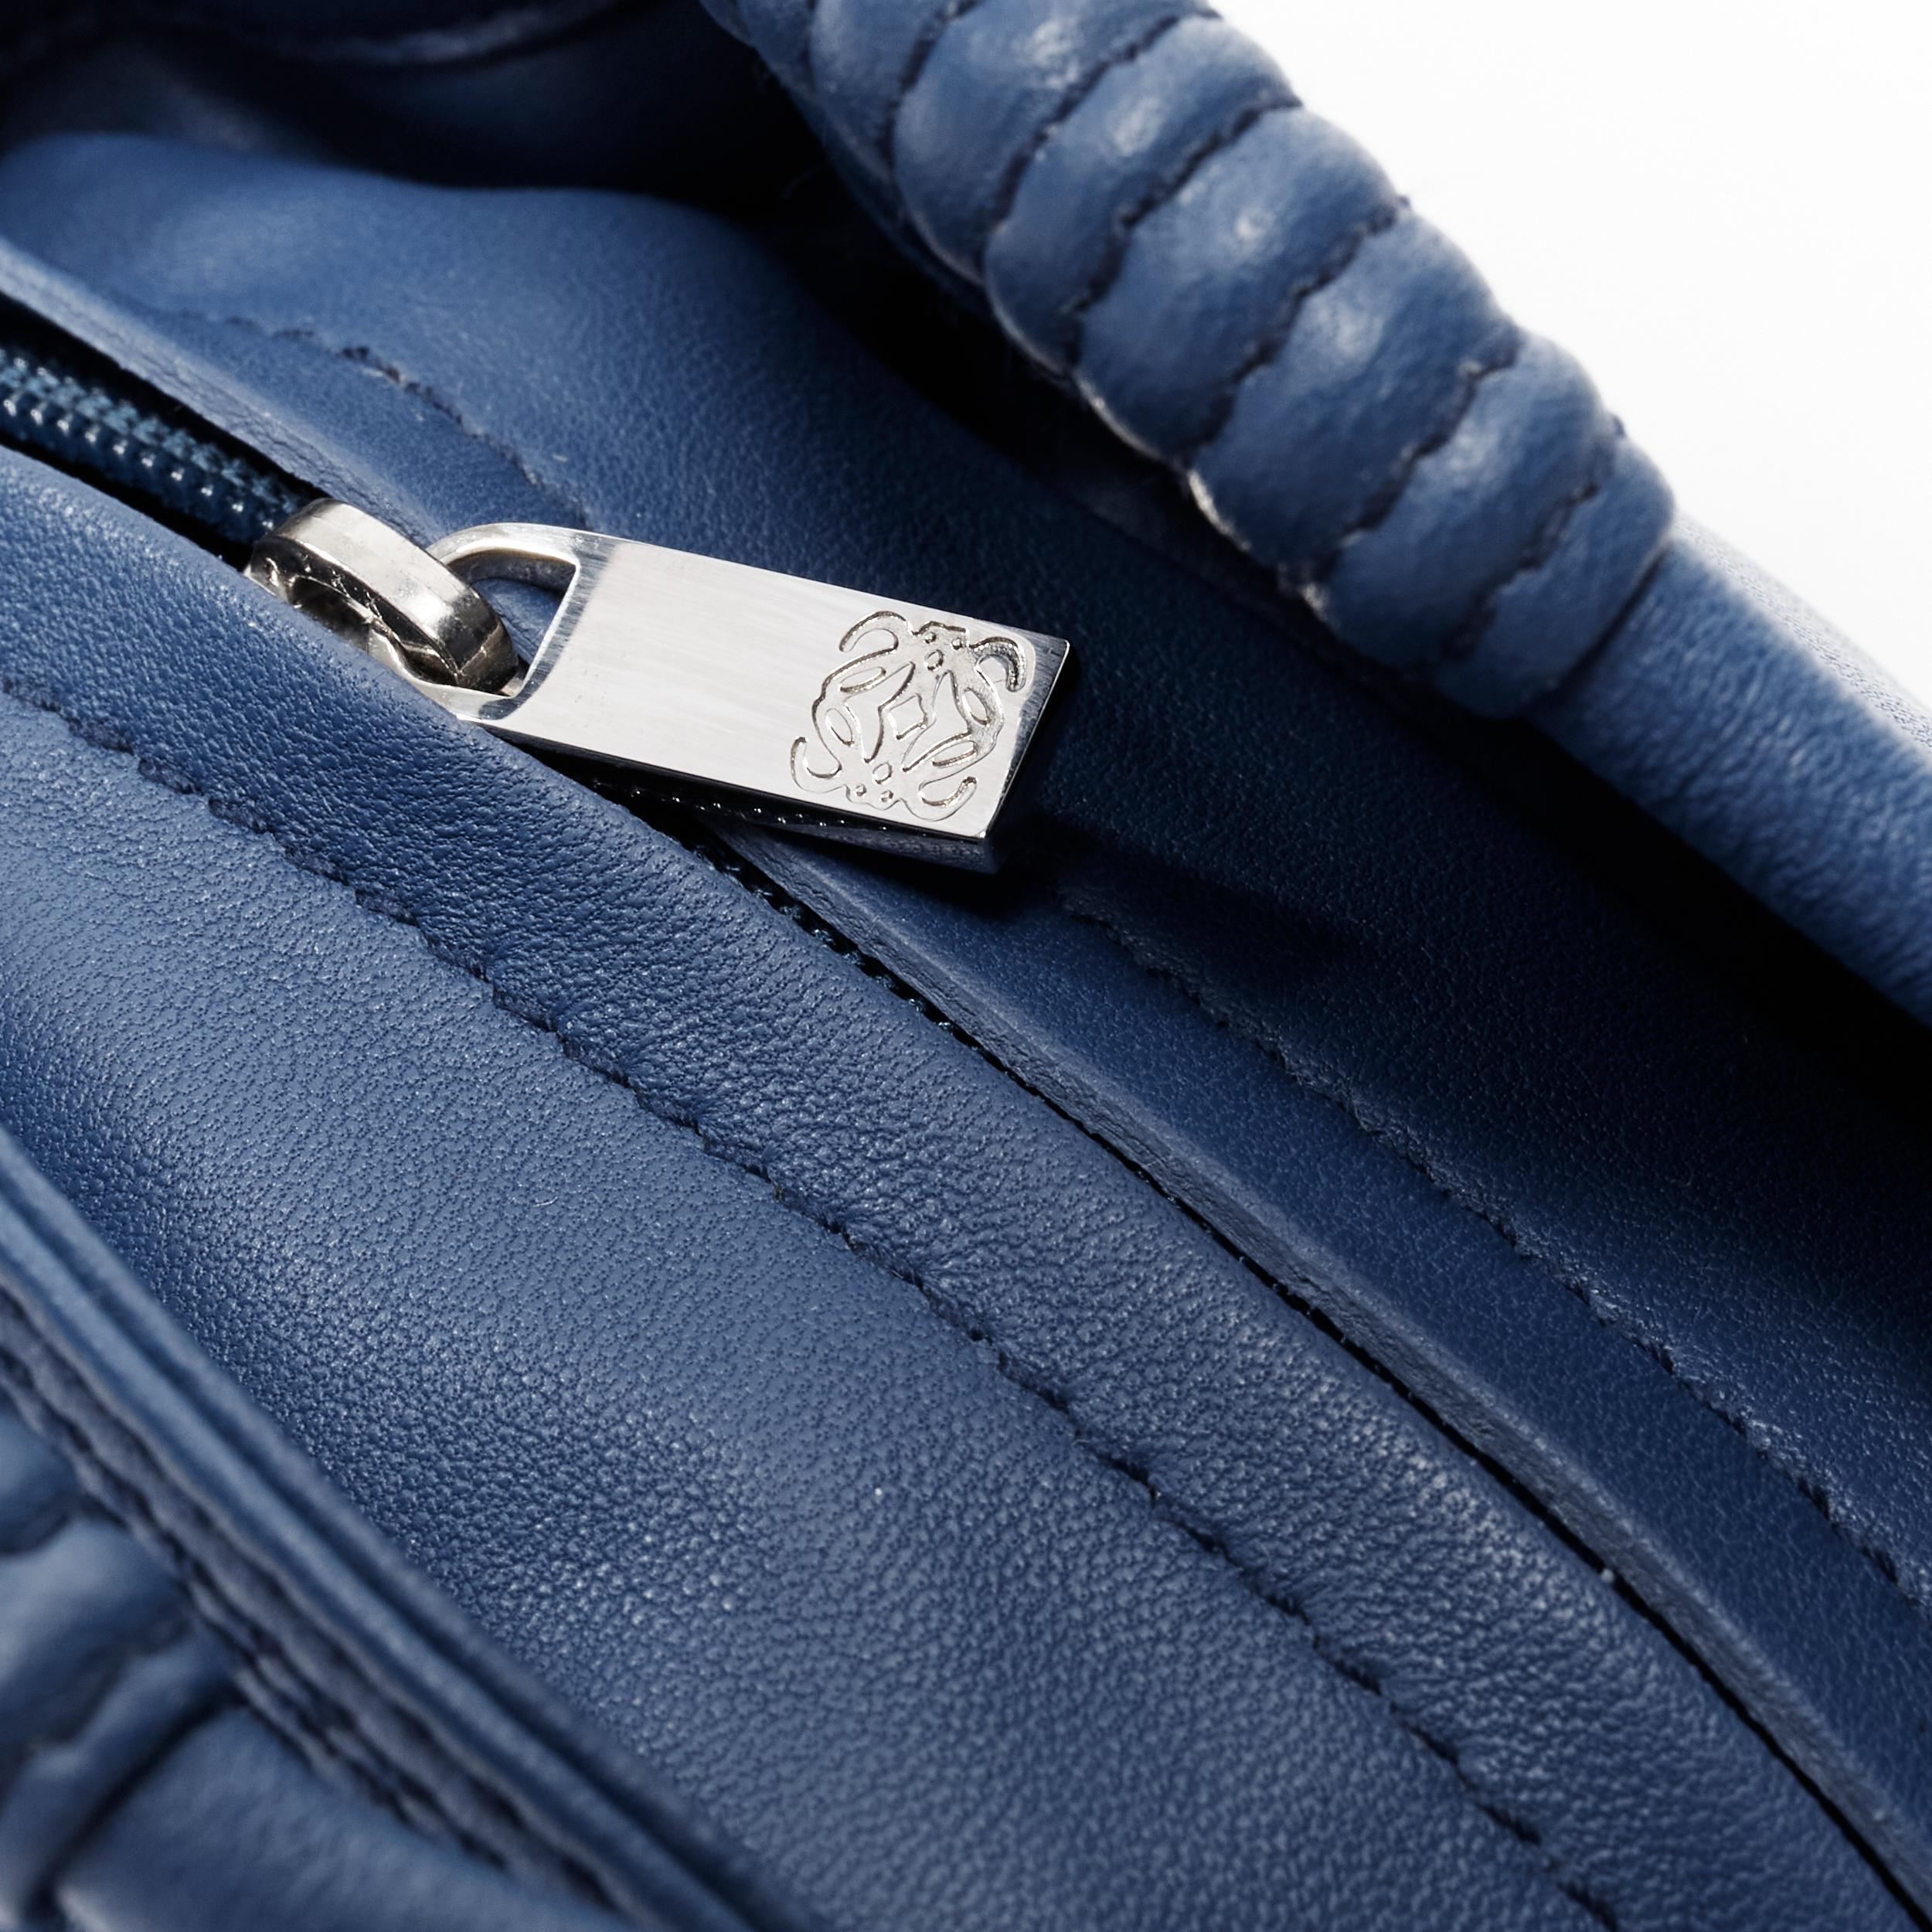 LOEWE Nano Aire Brisa blue nappa leather micro bag coin purse pouch 3